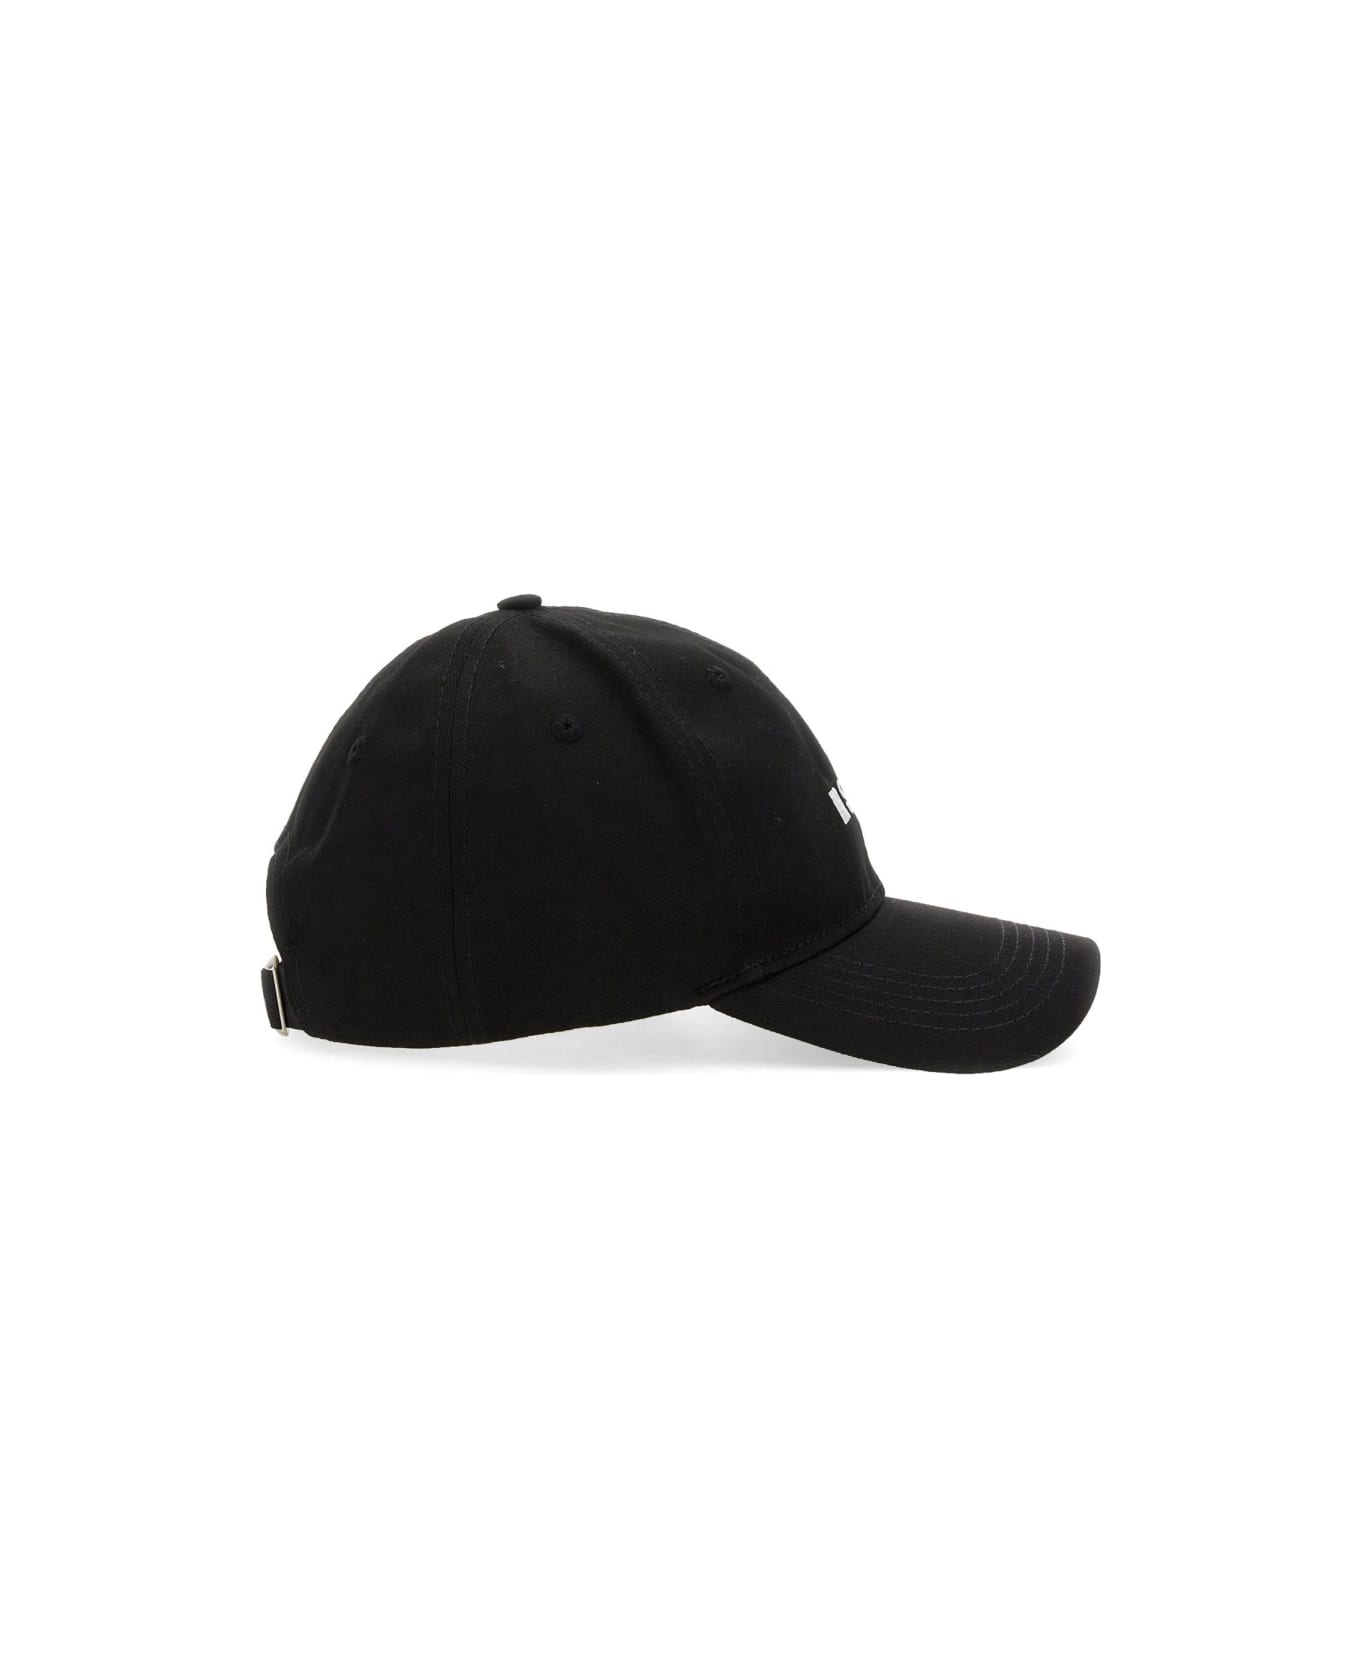 MSGM Baseball Cap - BLACK 帽子